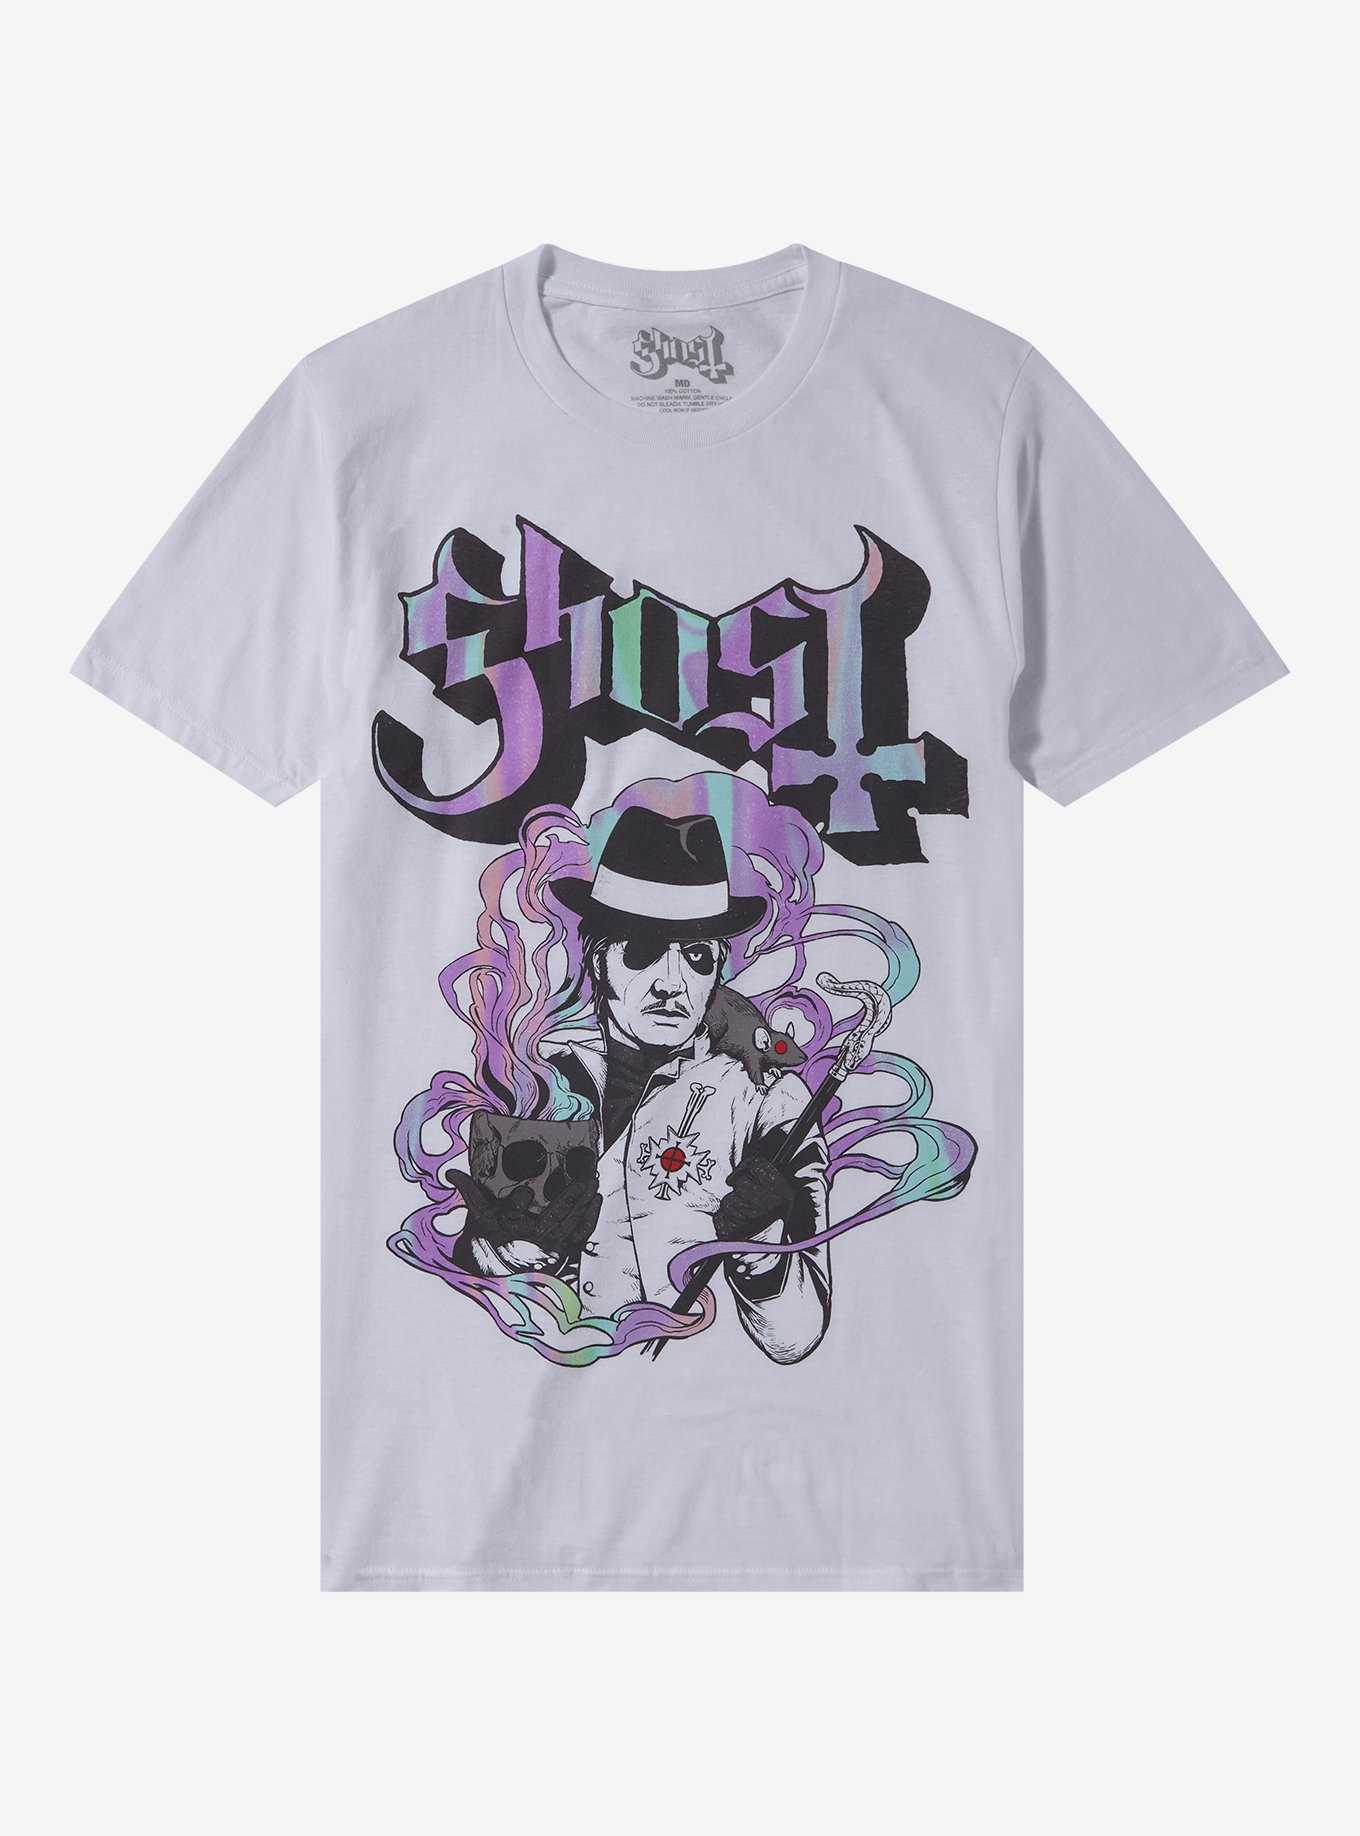 Ghost Smoke Trails Boyfriend Fit Girls T-Shirt, , hi-res